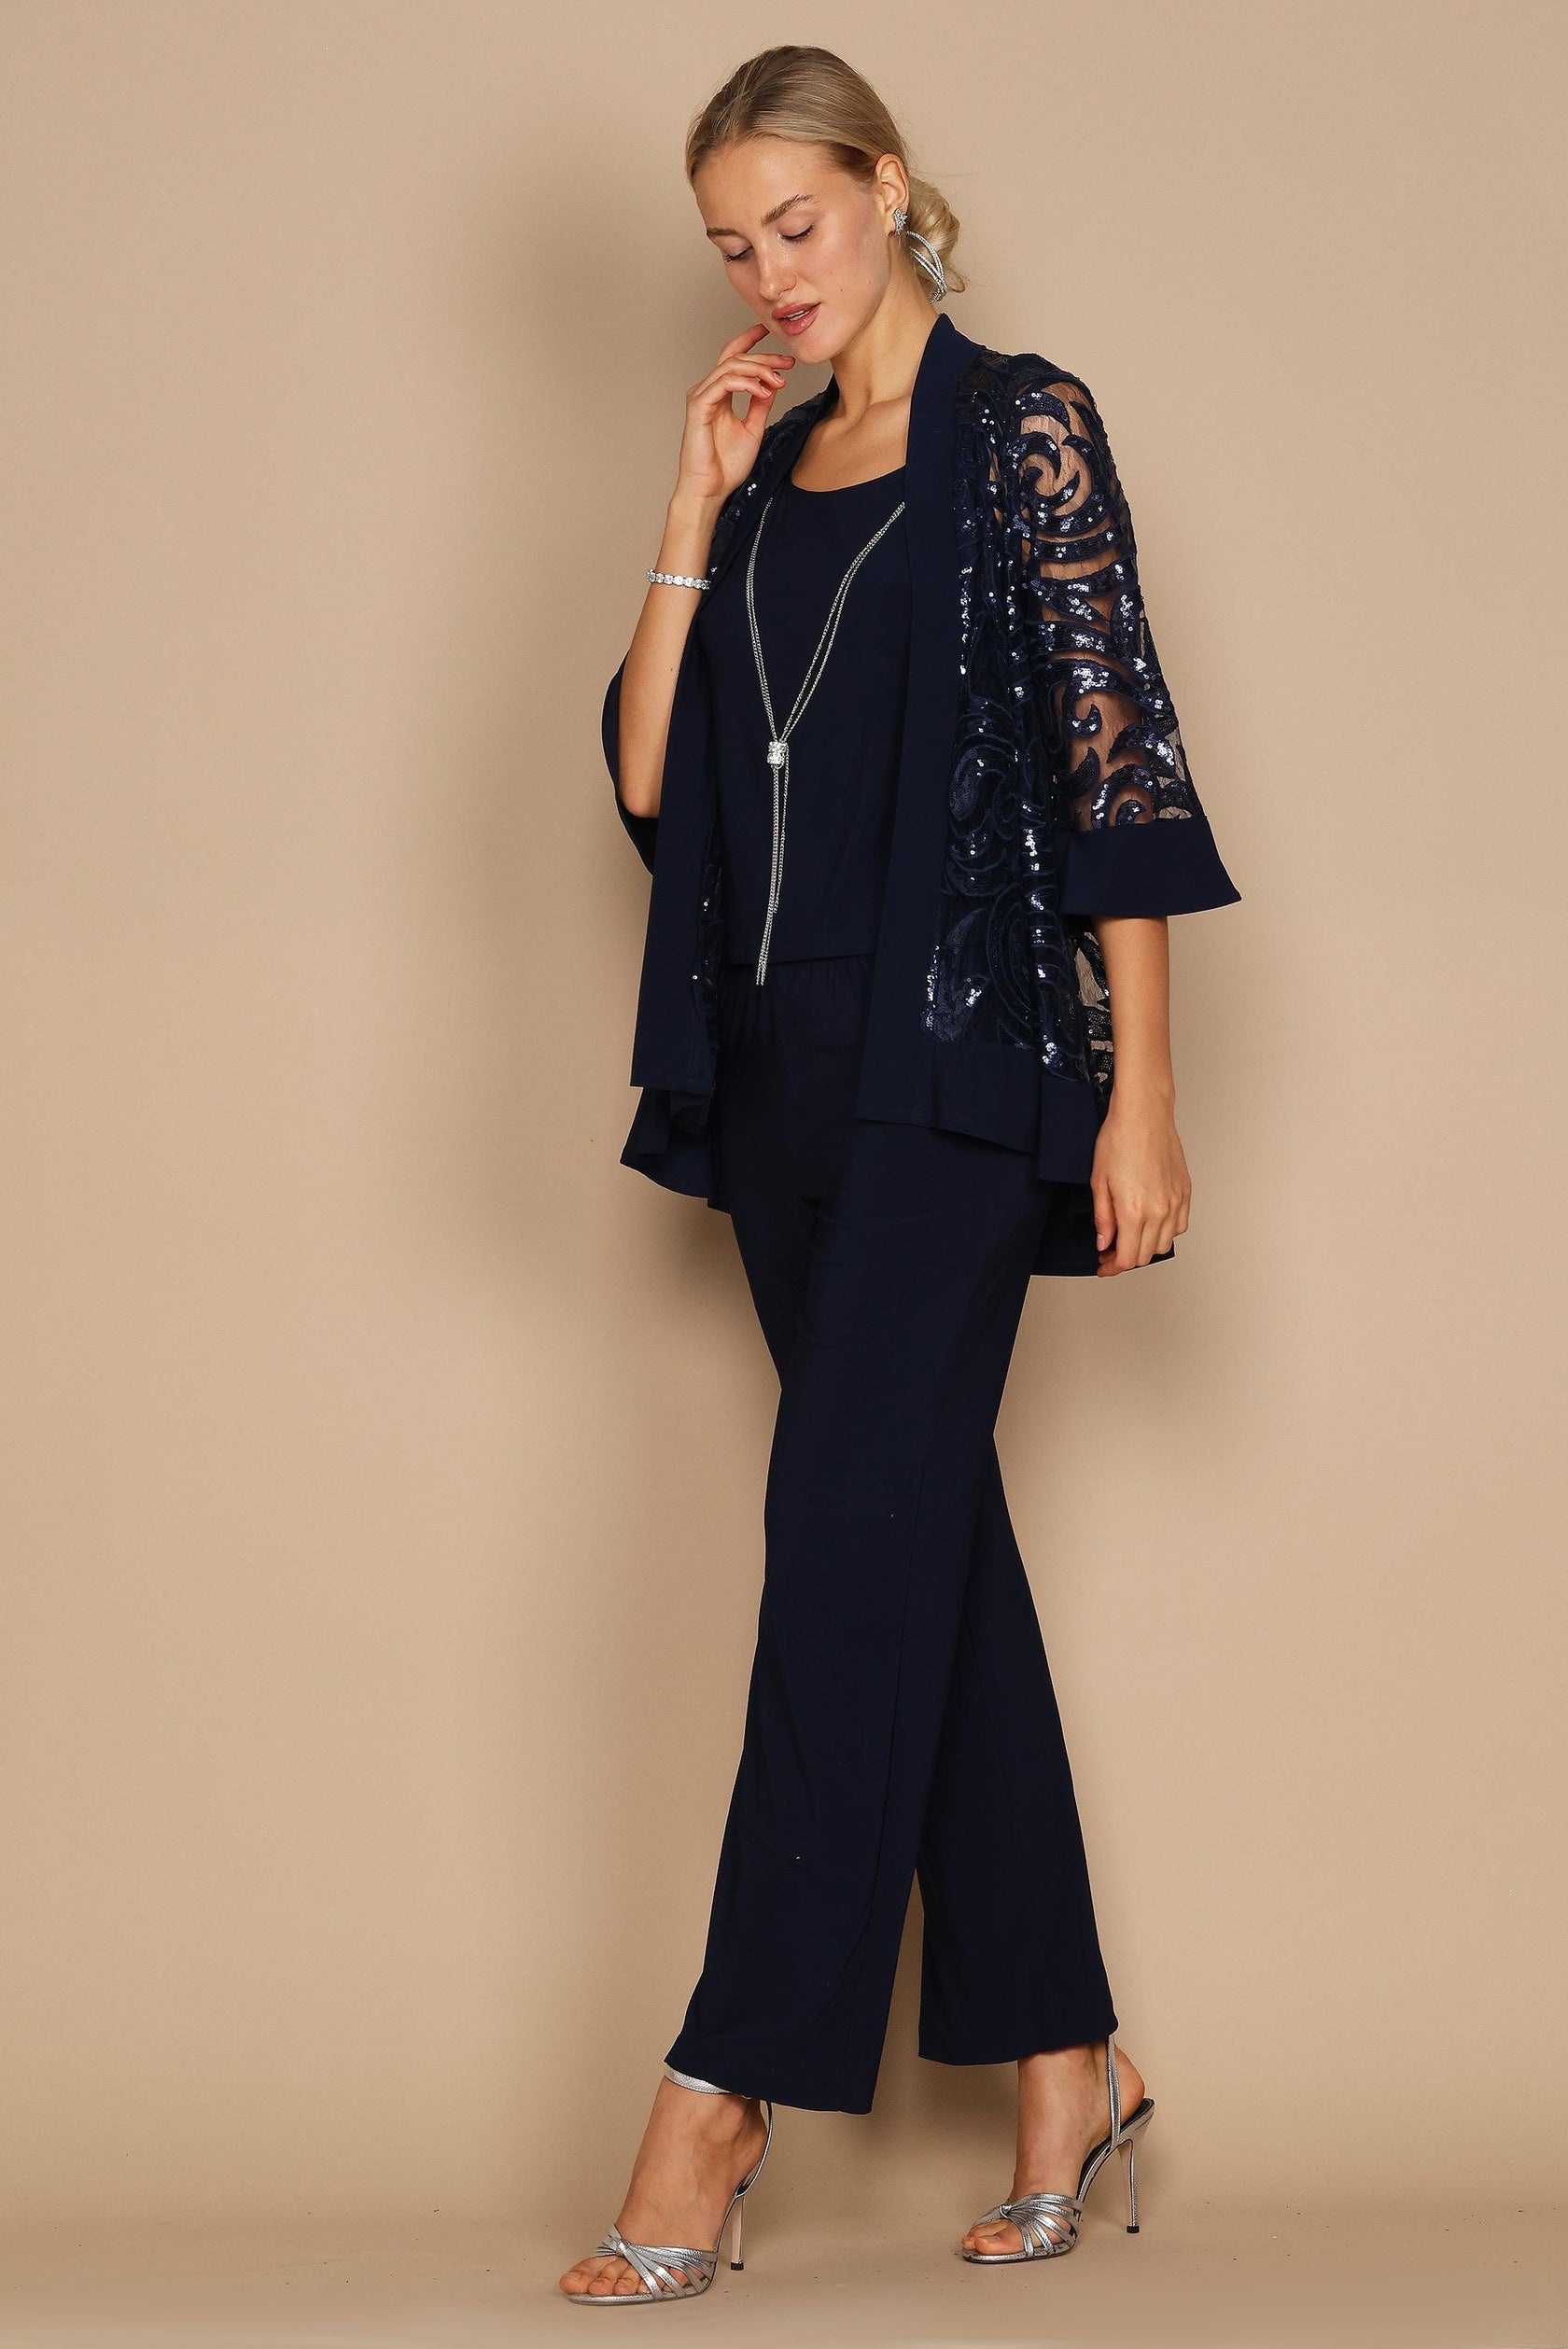 R&M Richards 2343W Formal Pantsuit Plus Size for $89.99 – The Dress Outlet